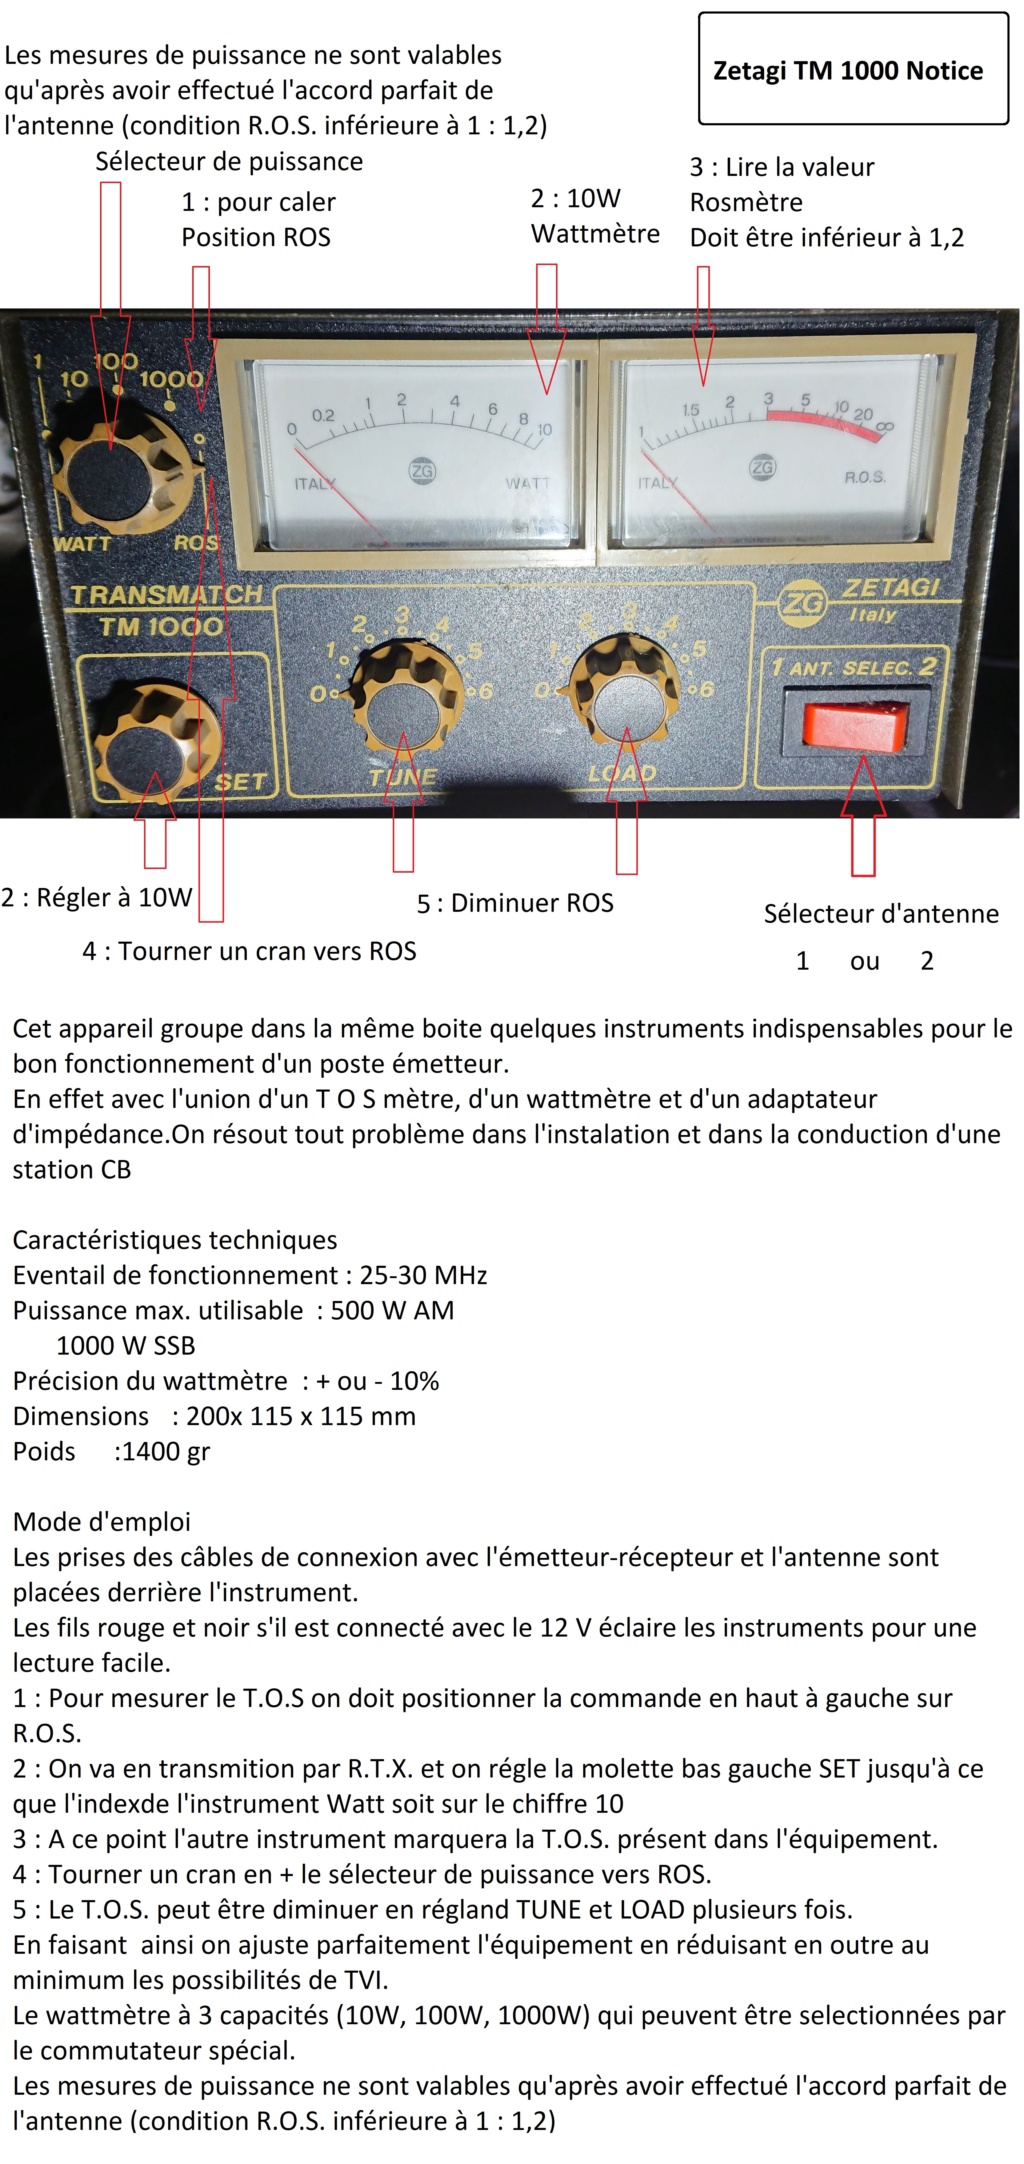 Tosmetre - Zetagi Transmatch TM 1000 (Tosmètre/Wattmètre/Matcher) - Page 2 Zetagi11